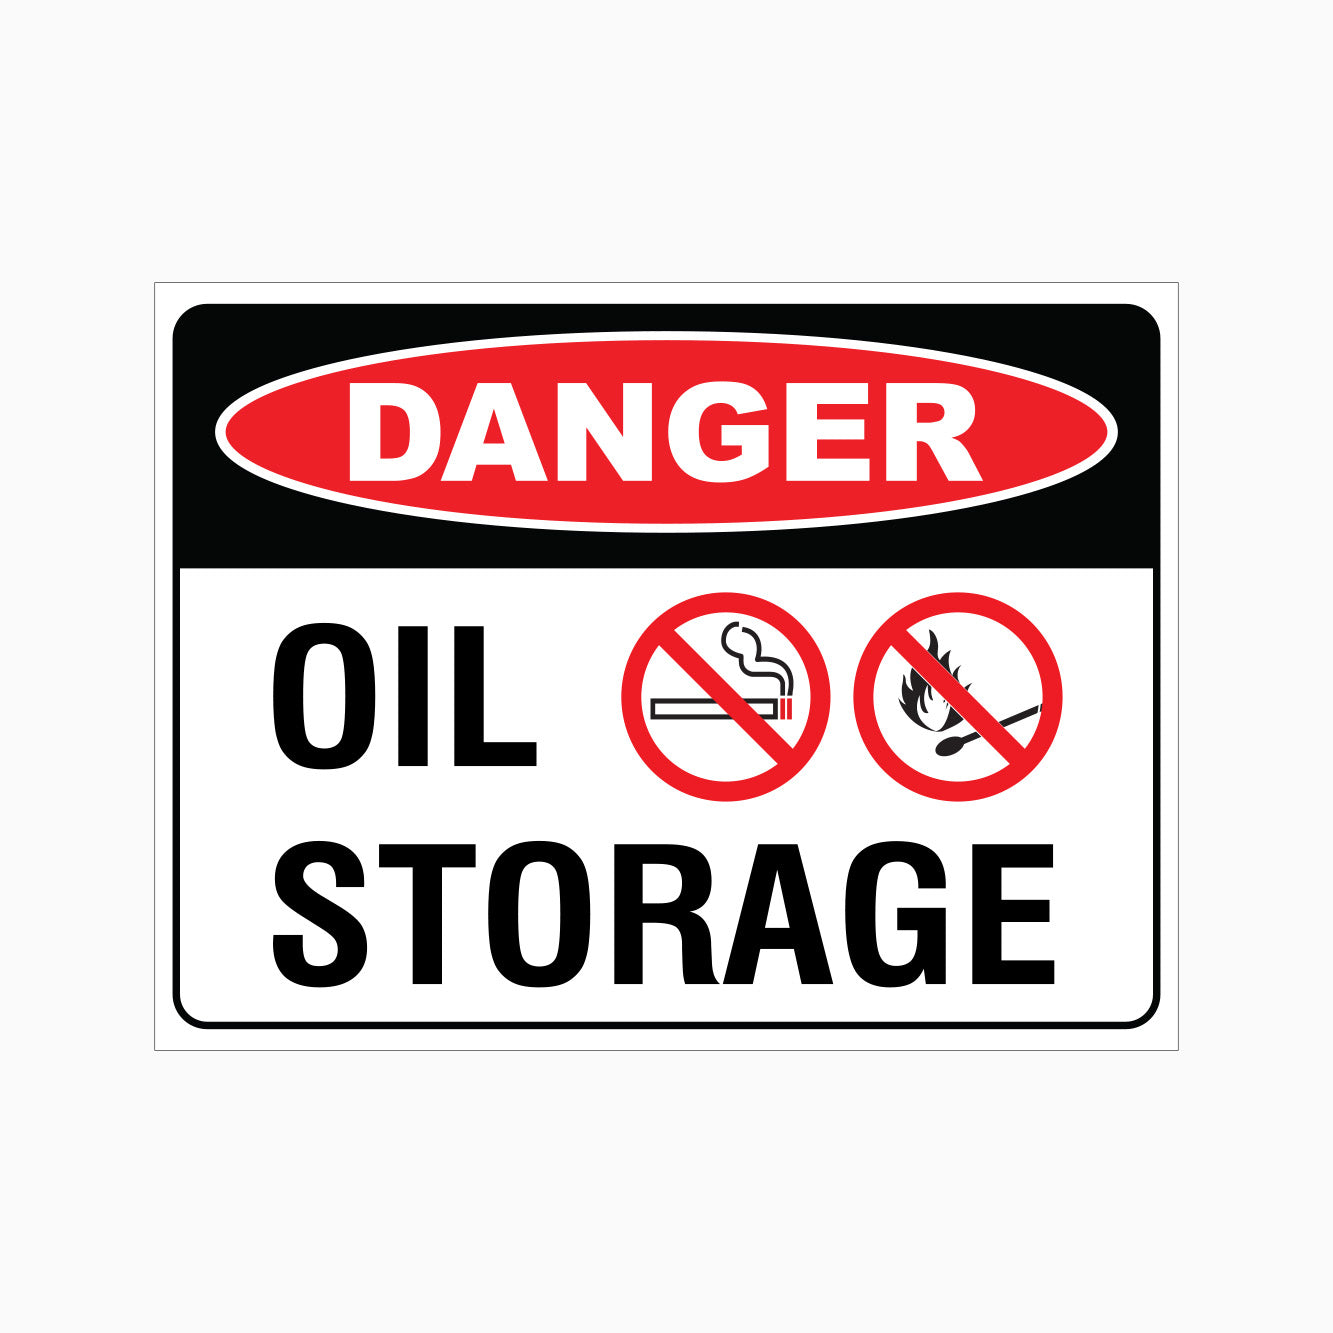 DANGER OIL STORAGE SIGN - NO SMOKING SIGN - GET SIGNS